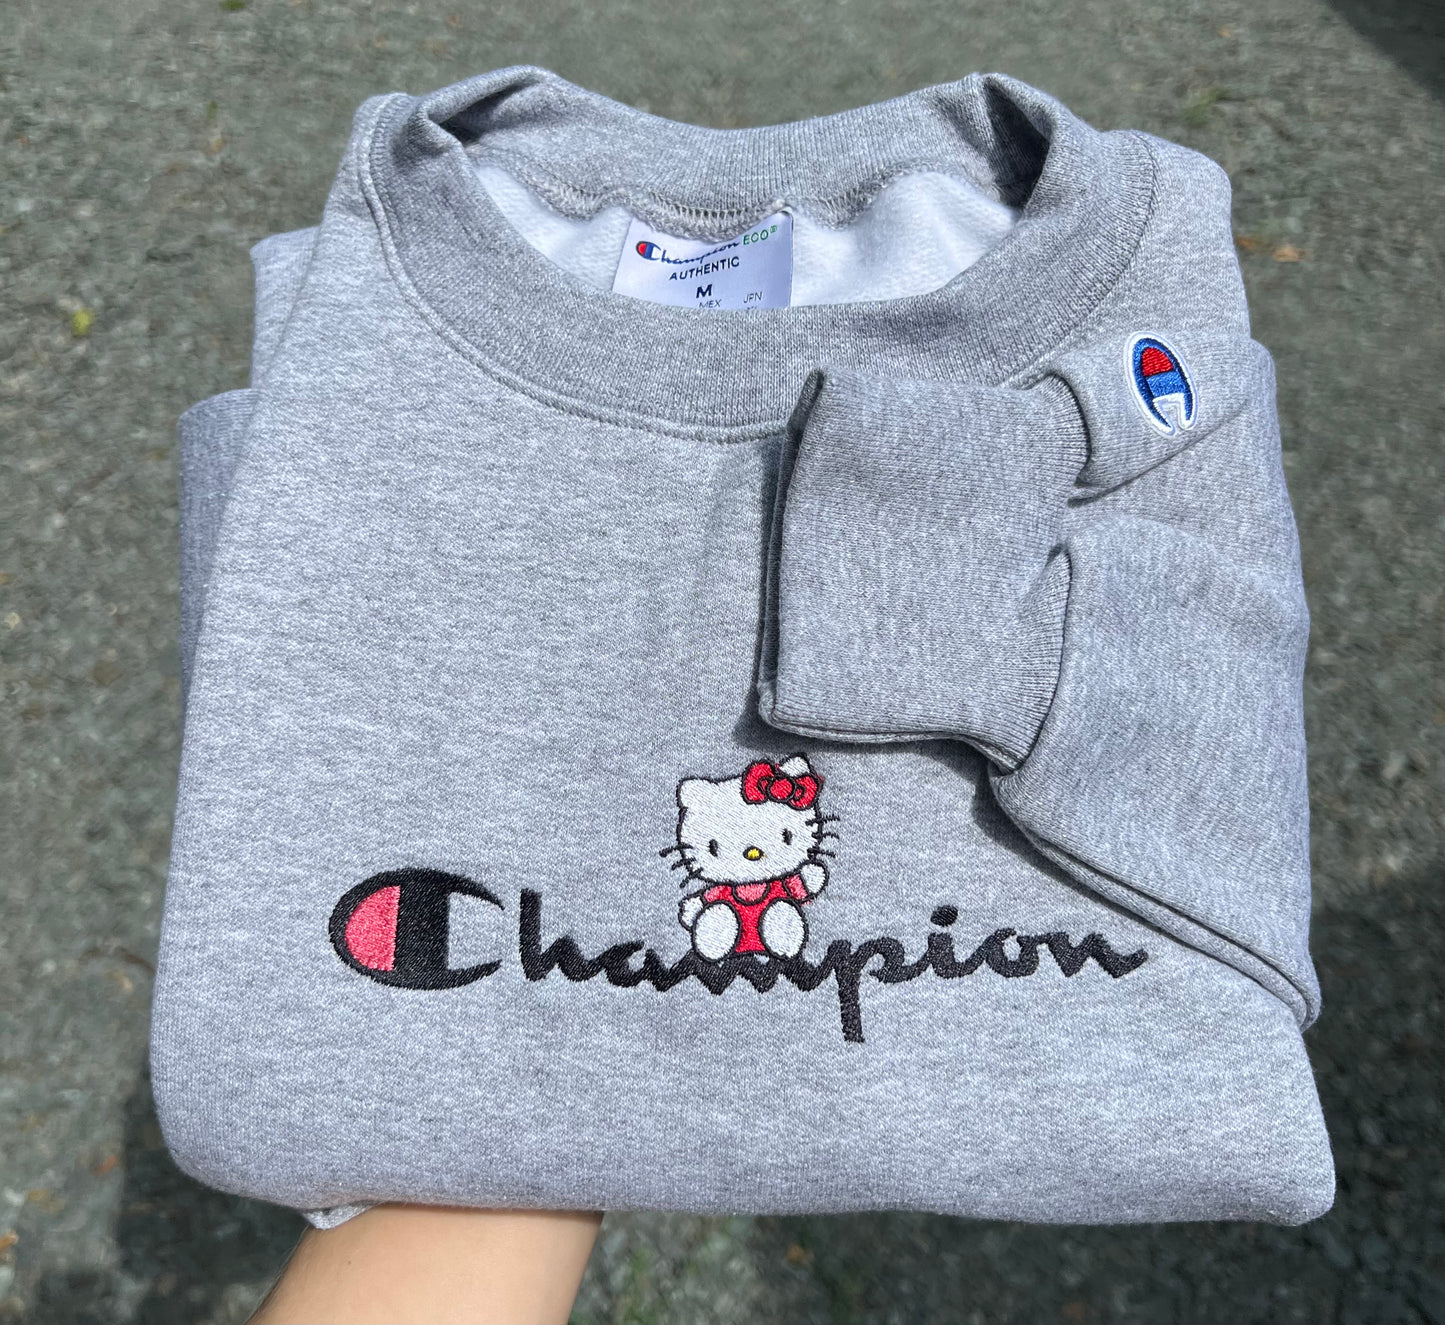 Kitty x Champion Embroidery Crewneck Sweatshirt